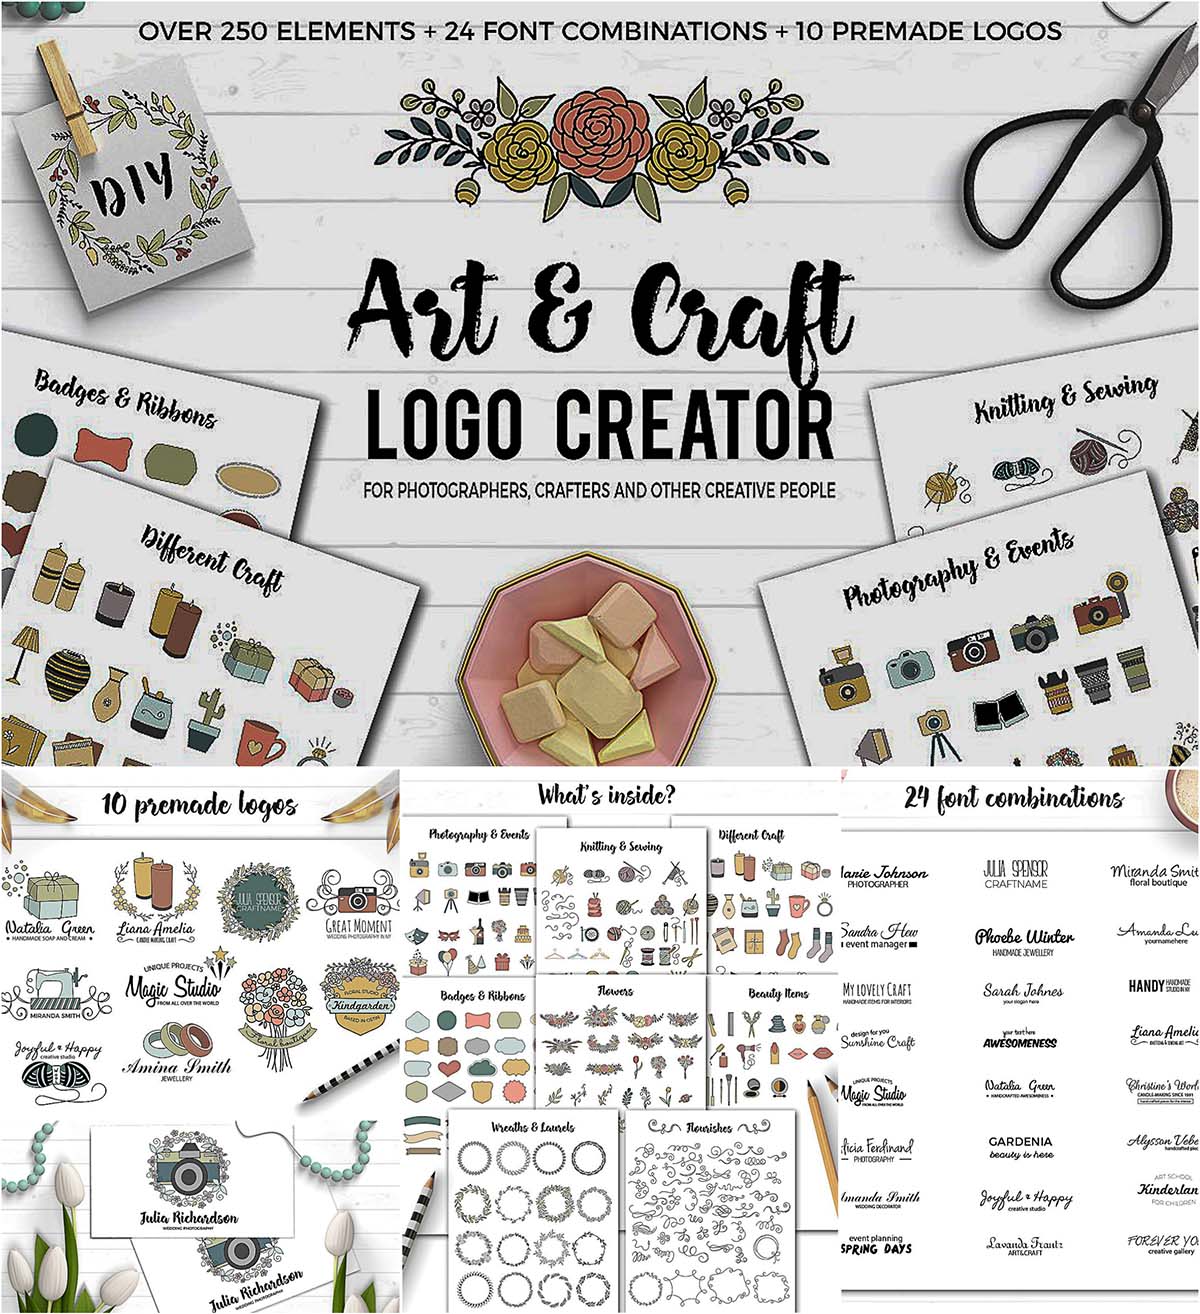 Logotype creator online